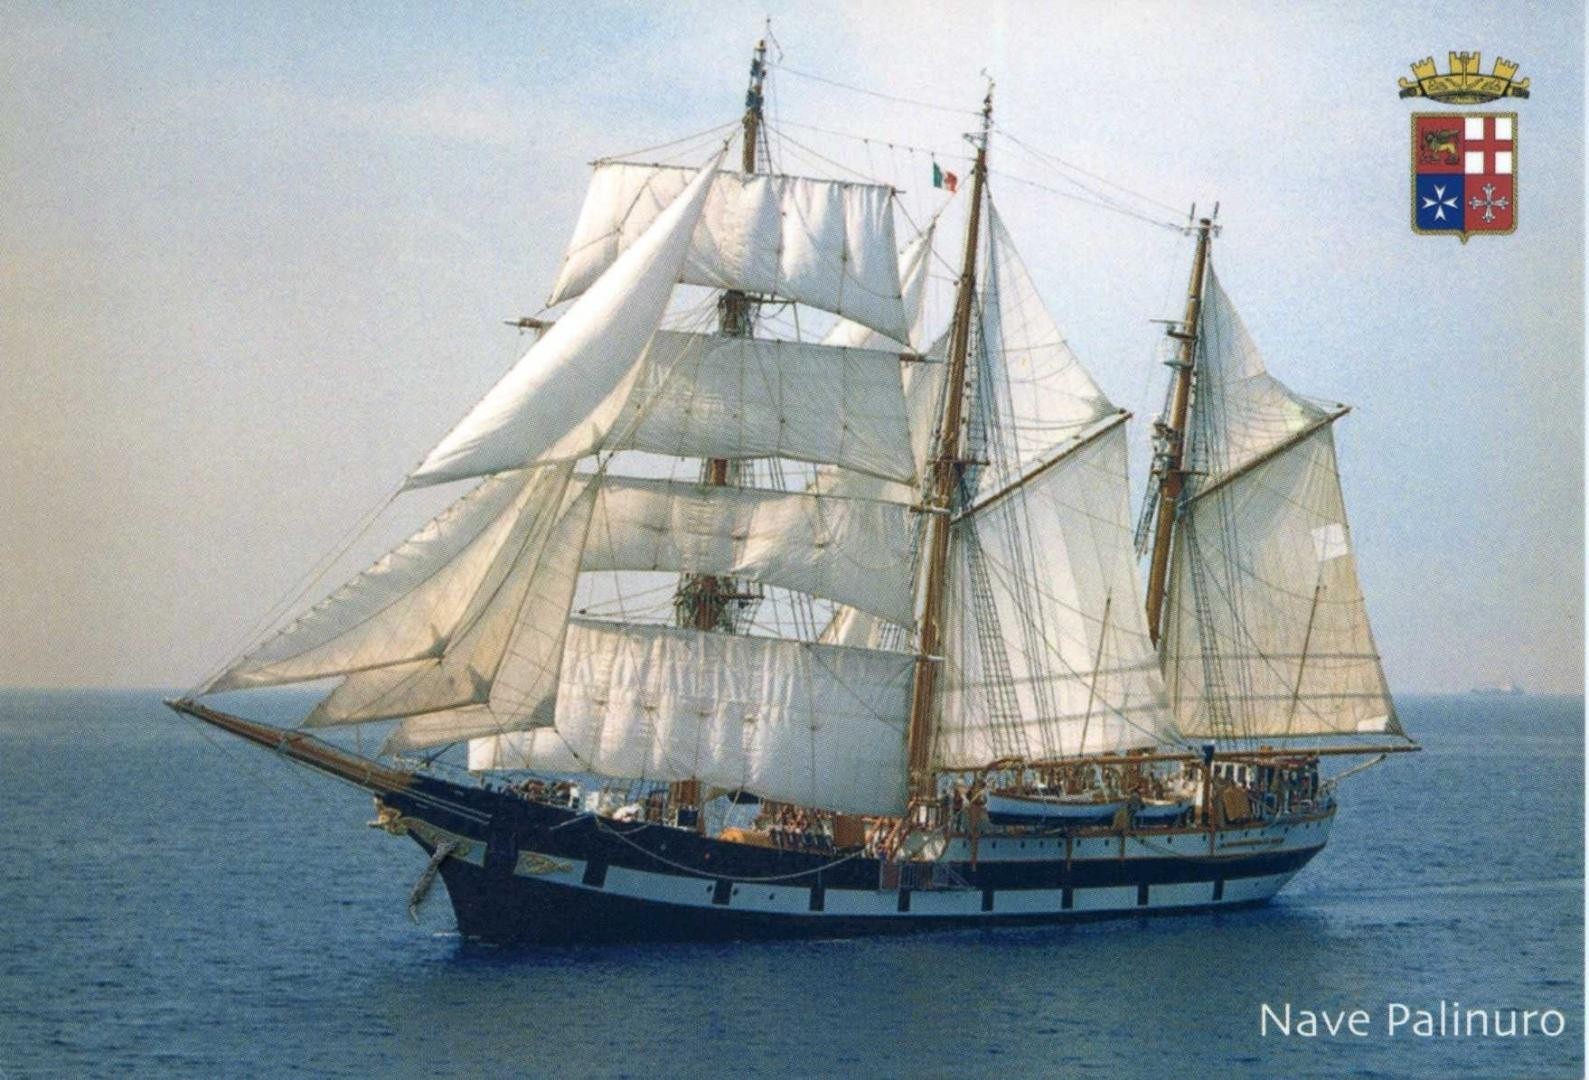 Italian Navy, Nave Palinuro